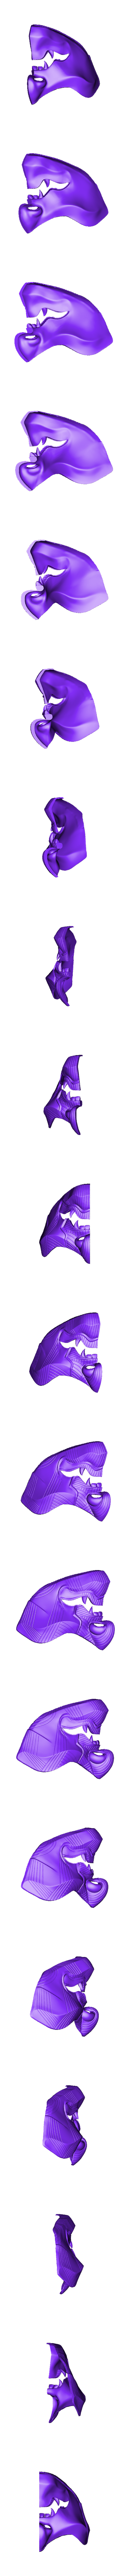 LeftSide.obj Descargar archivo OBJ FANTASTIAS DE TSUSHIMA - Sakai Mask juego de disfraces japonés de Cosplay • Objeto para impresora 3D, 3DCraftsman